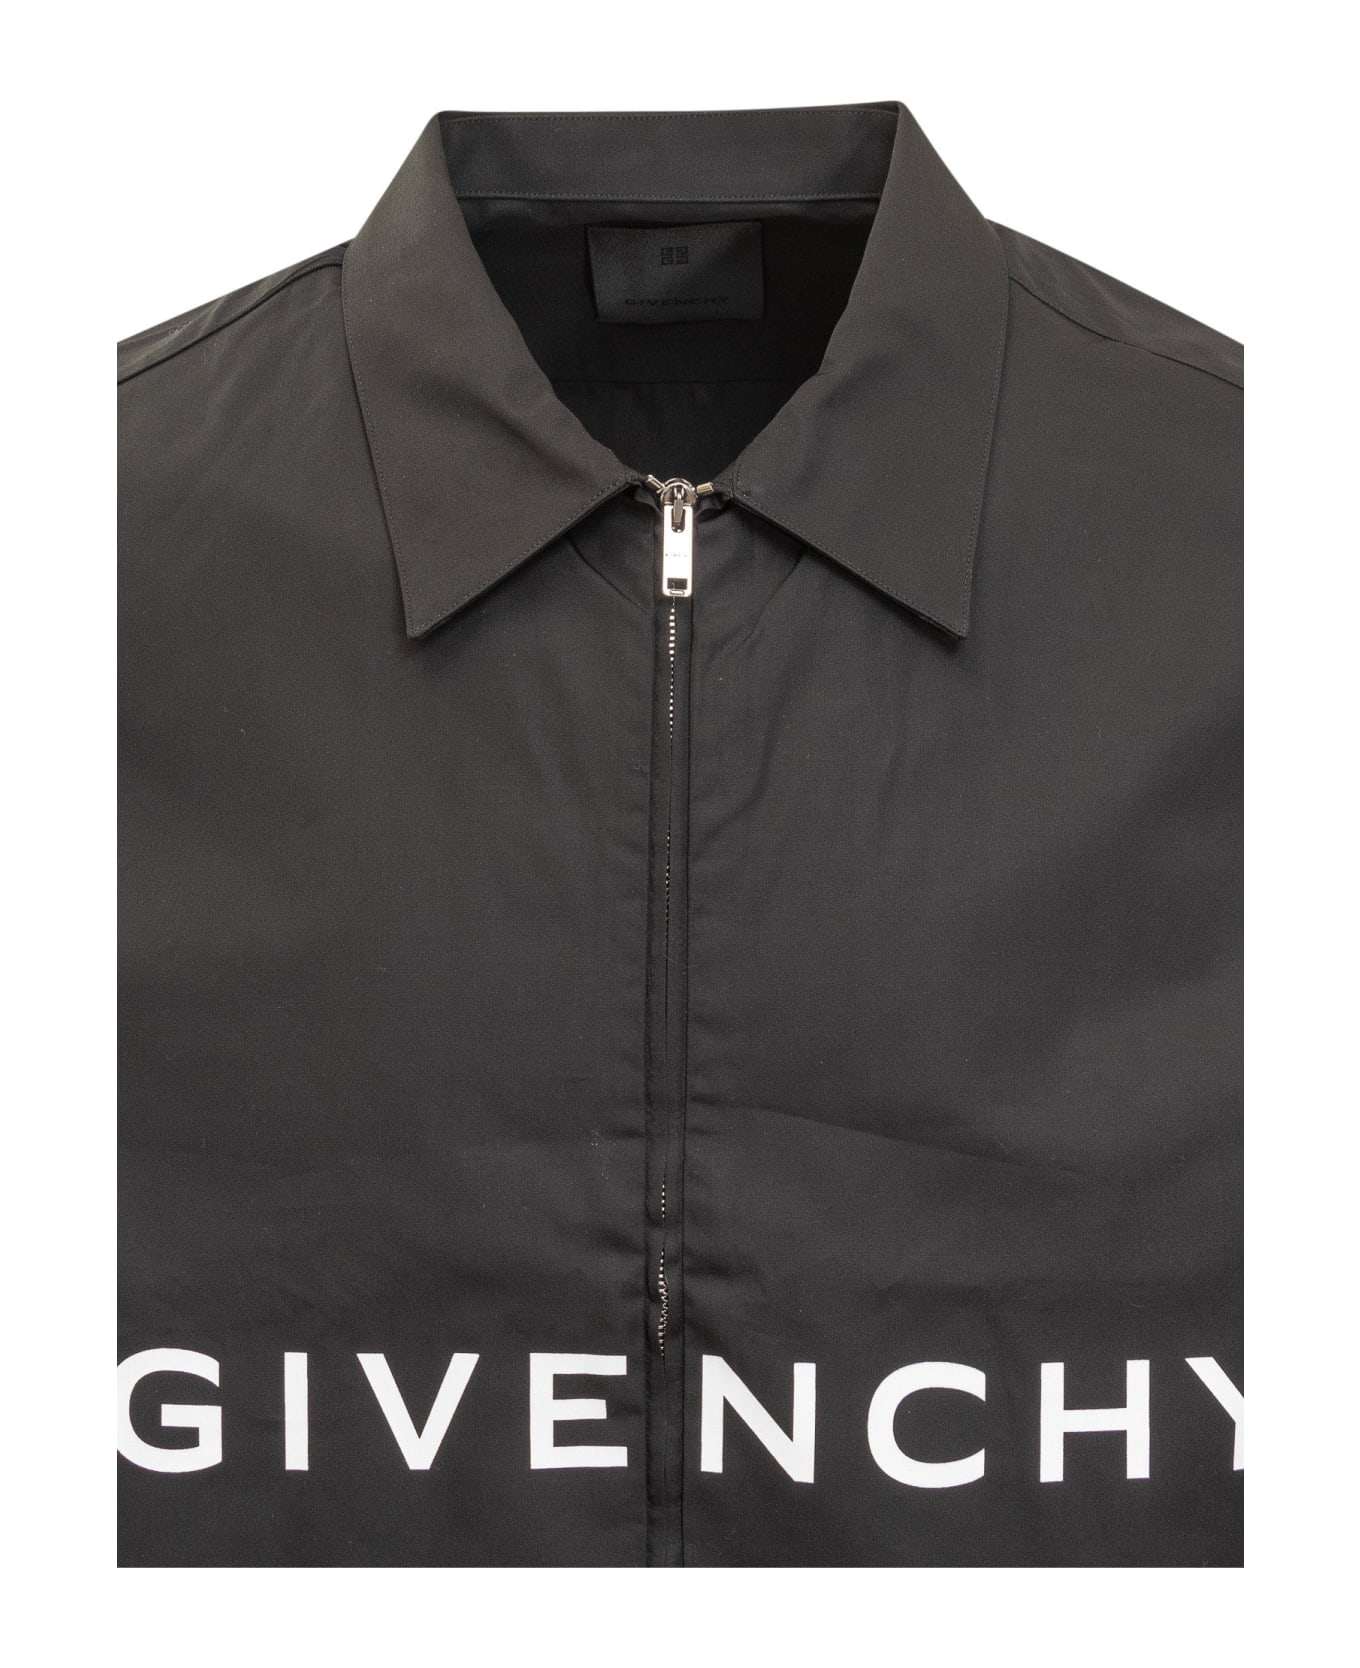 Givenchy Boxy Fit Long Sleeve Zip Print Shirt - BLACK